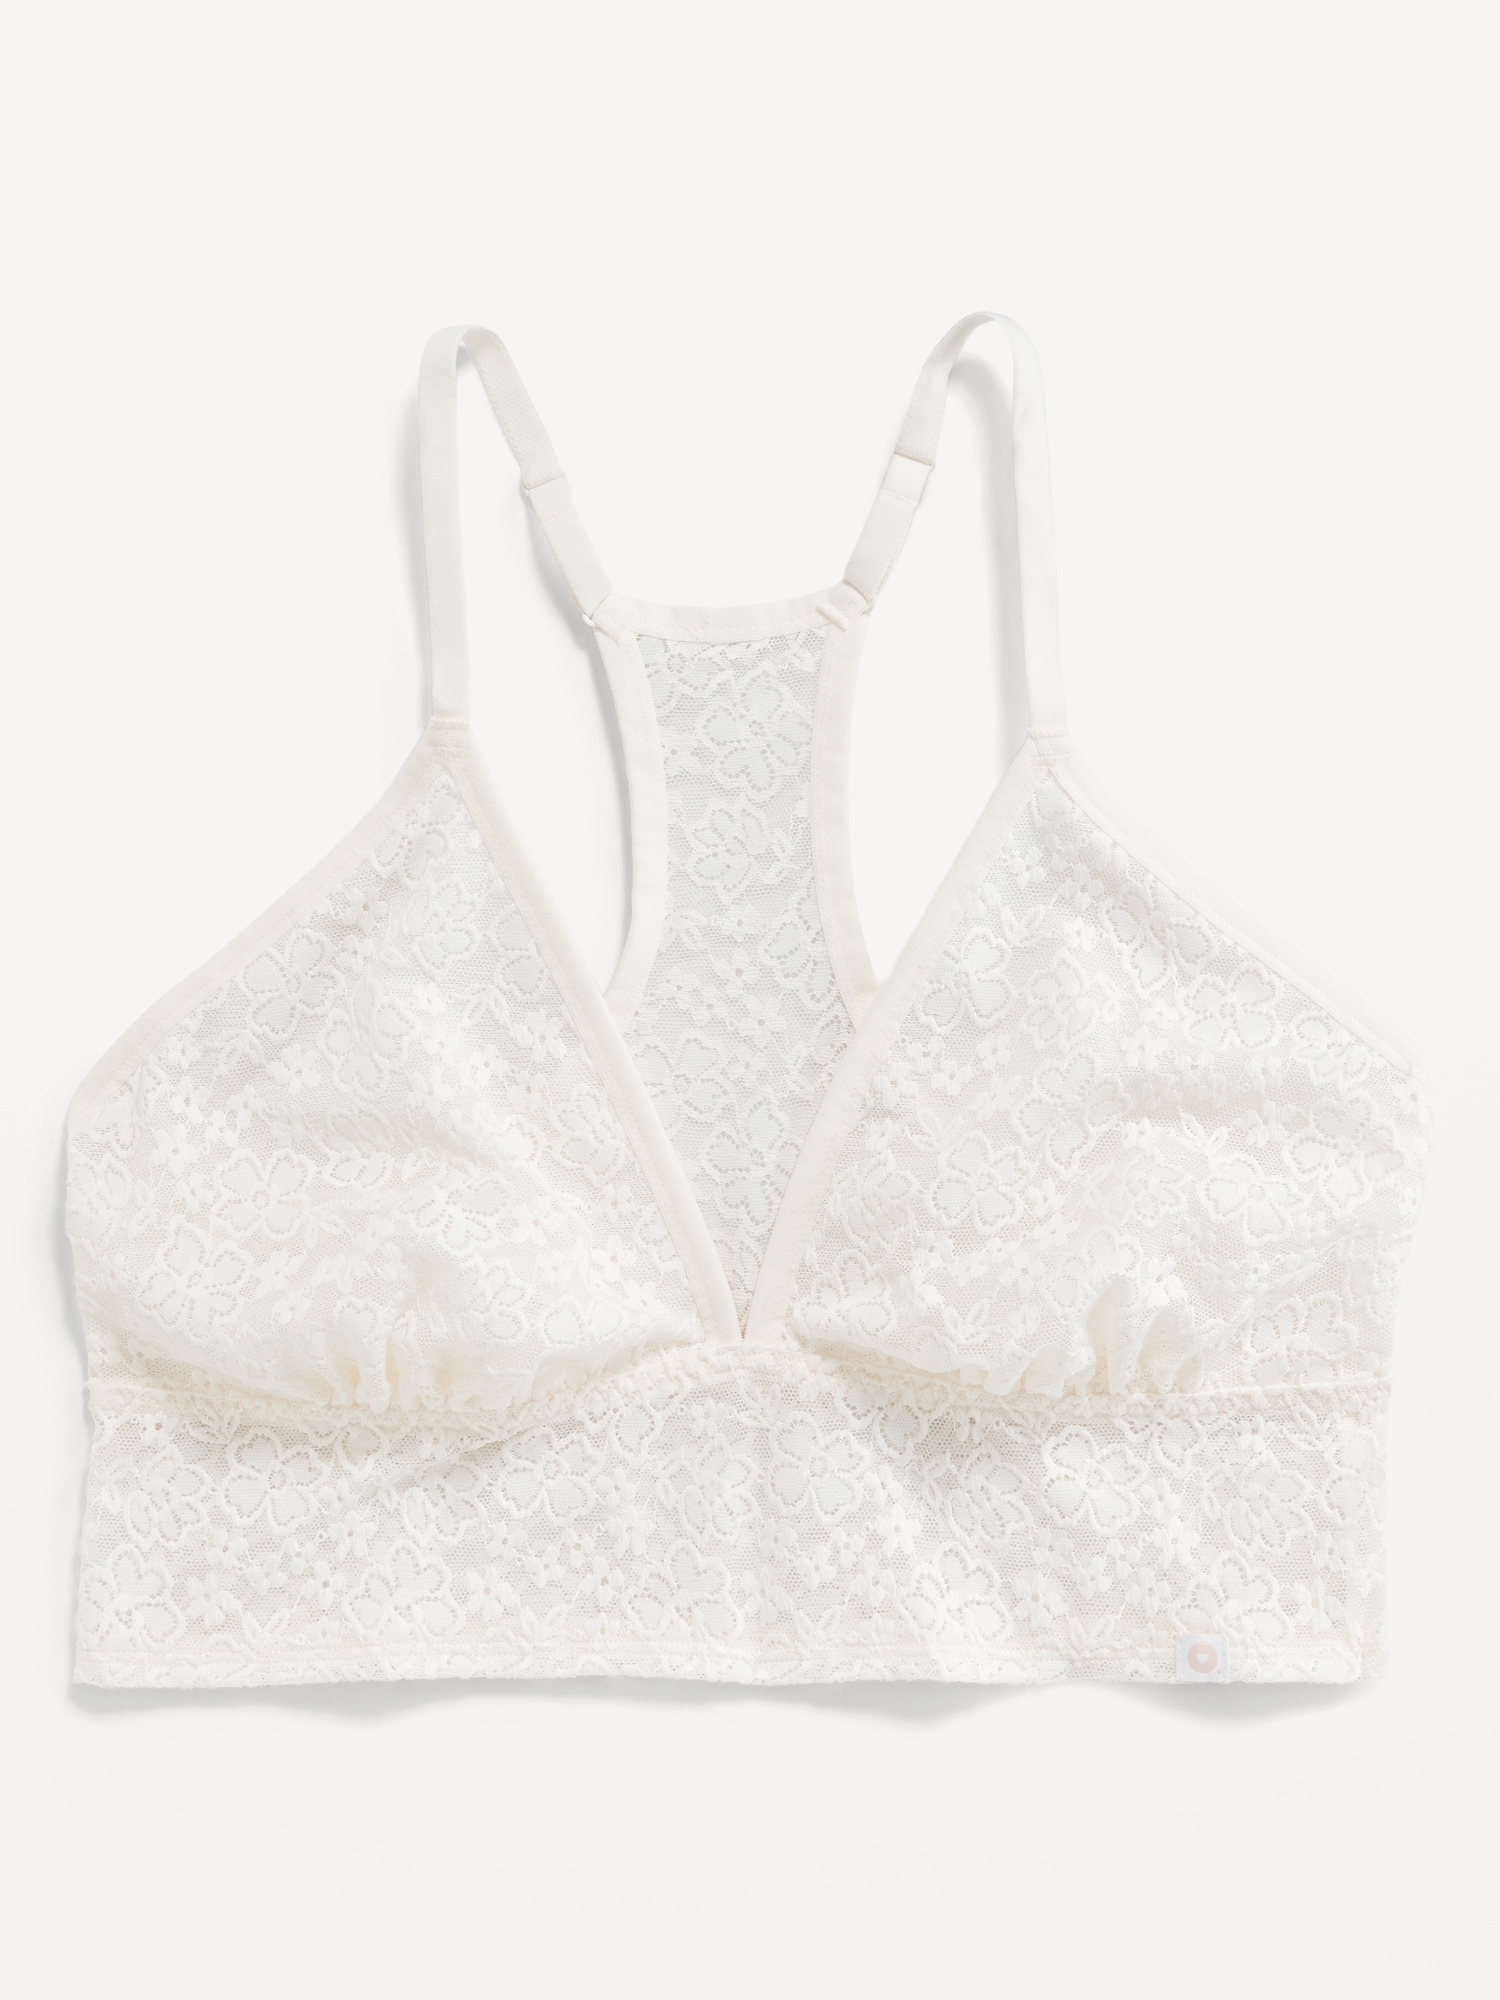 Hollister, Intimates & Sleepwear, White Lace Hollister Bralette